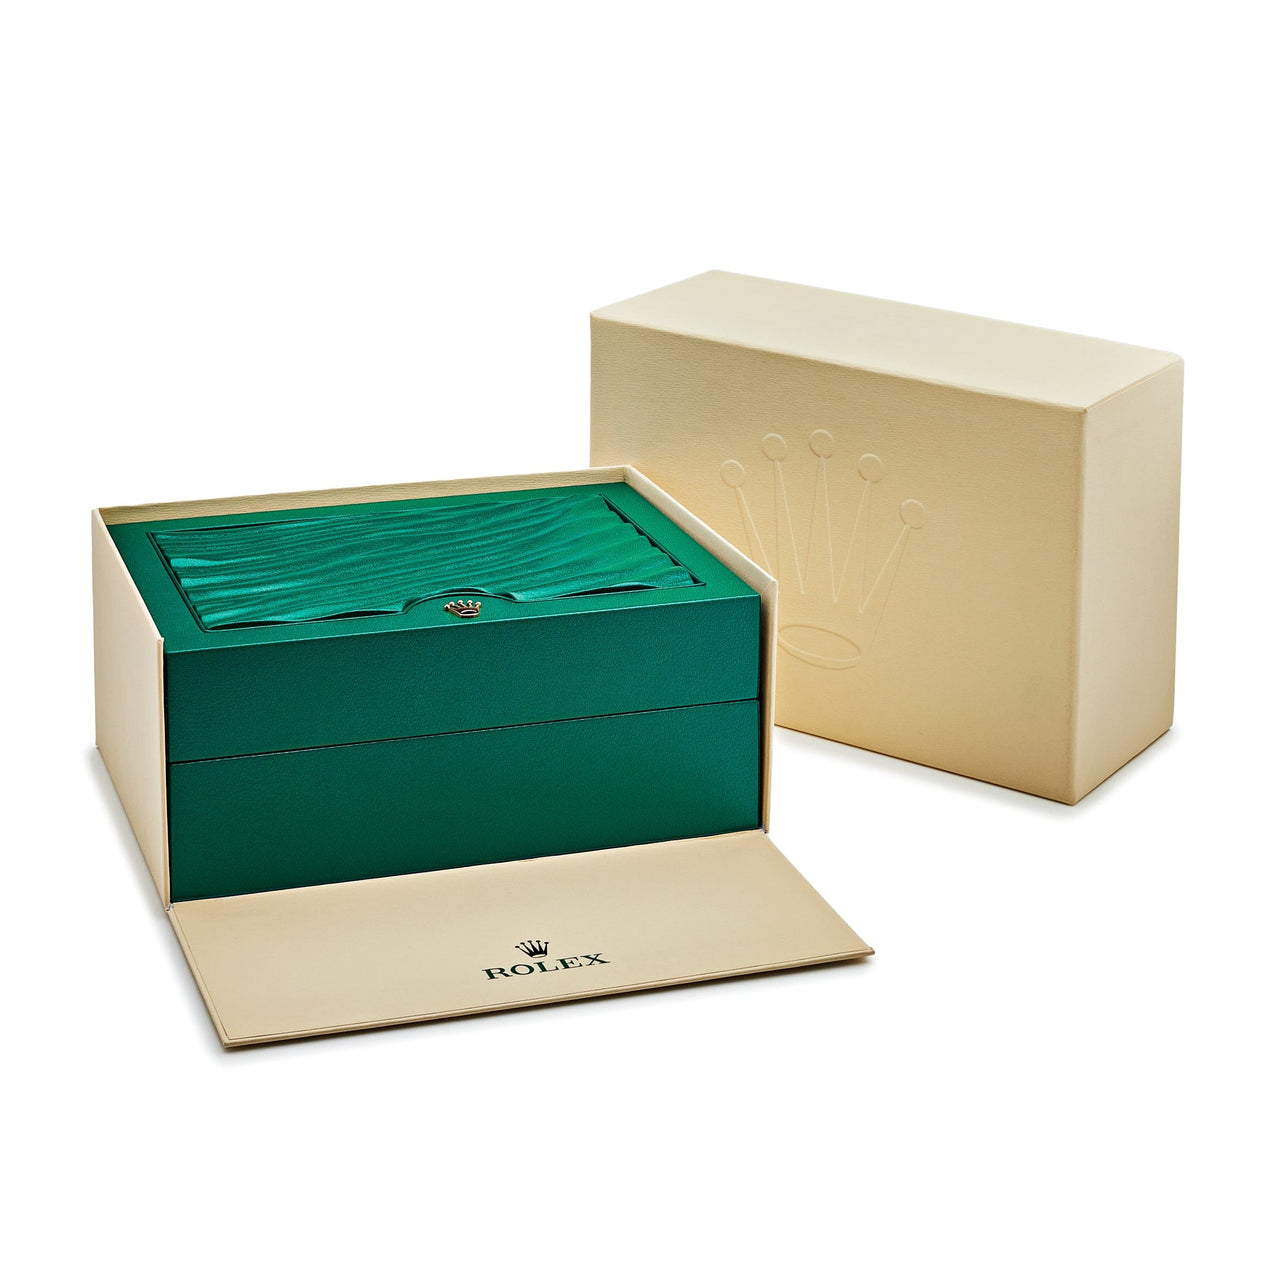 Luxury Watch Rolex Day-Date 40 Rose Gold Olive Green Dial 228235 (2023) Wrist Aficionado